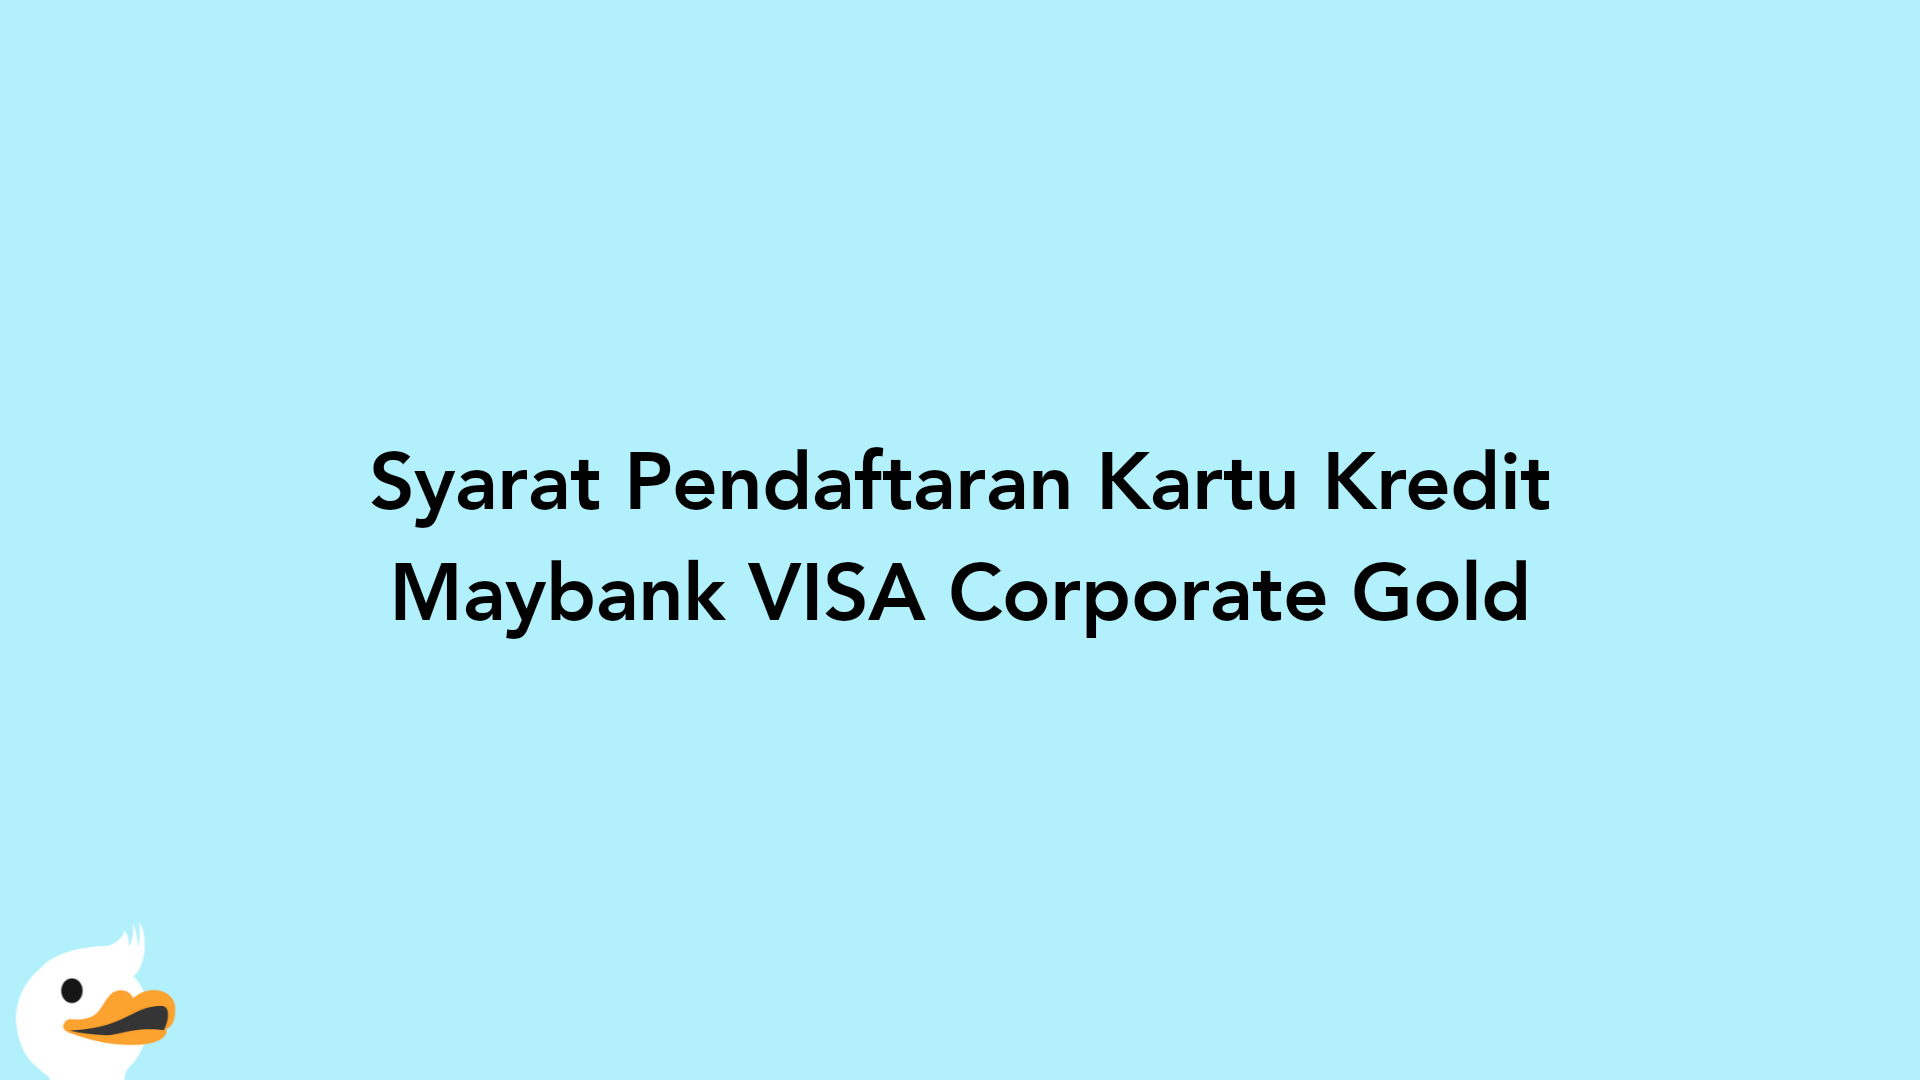 Syarat Pendaftaran Kartu Kredit Maybank VISA Corporate Gold